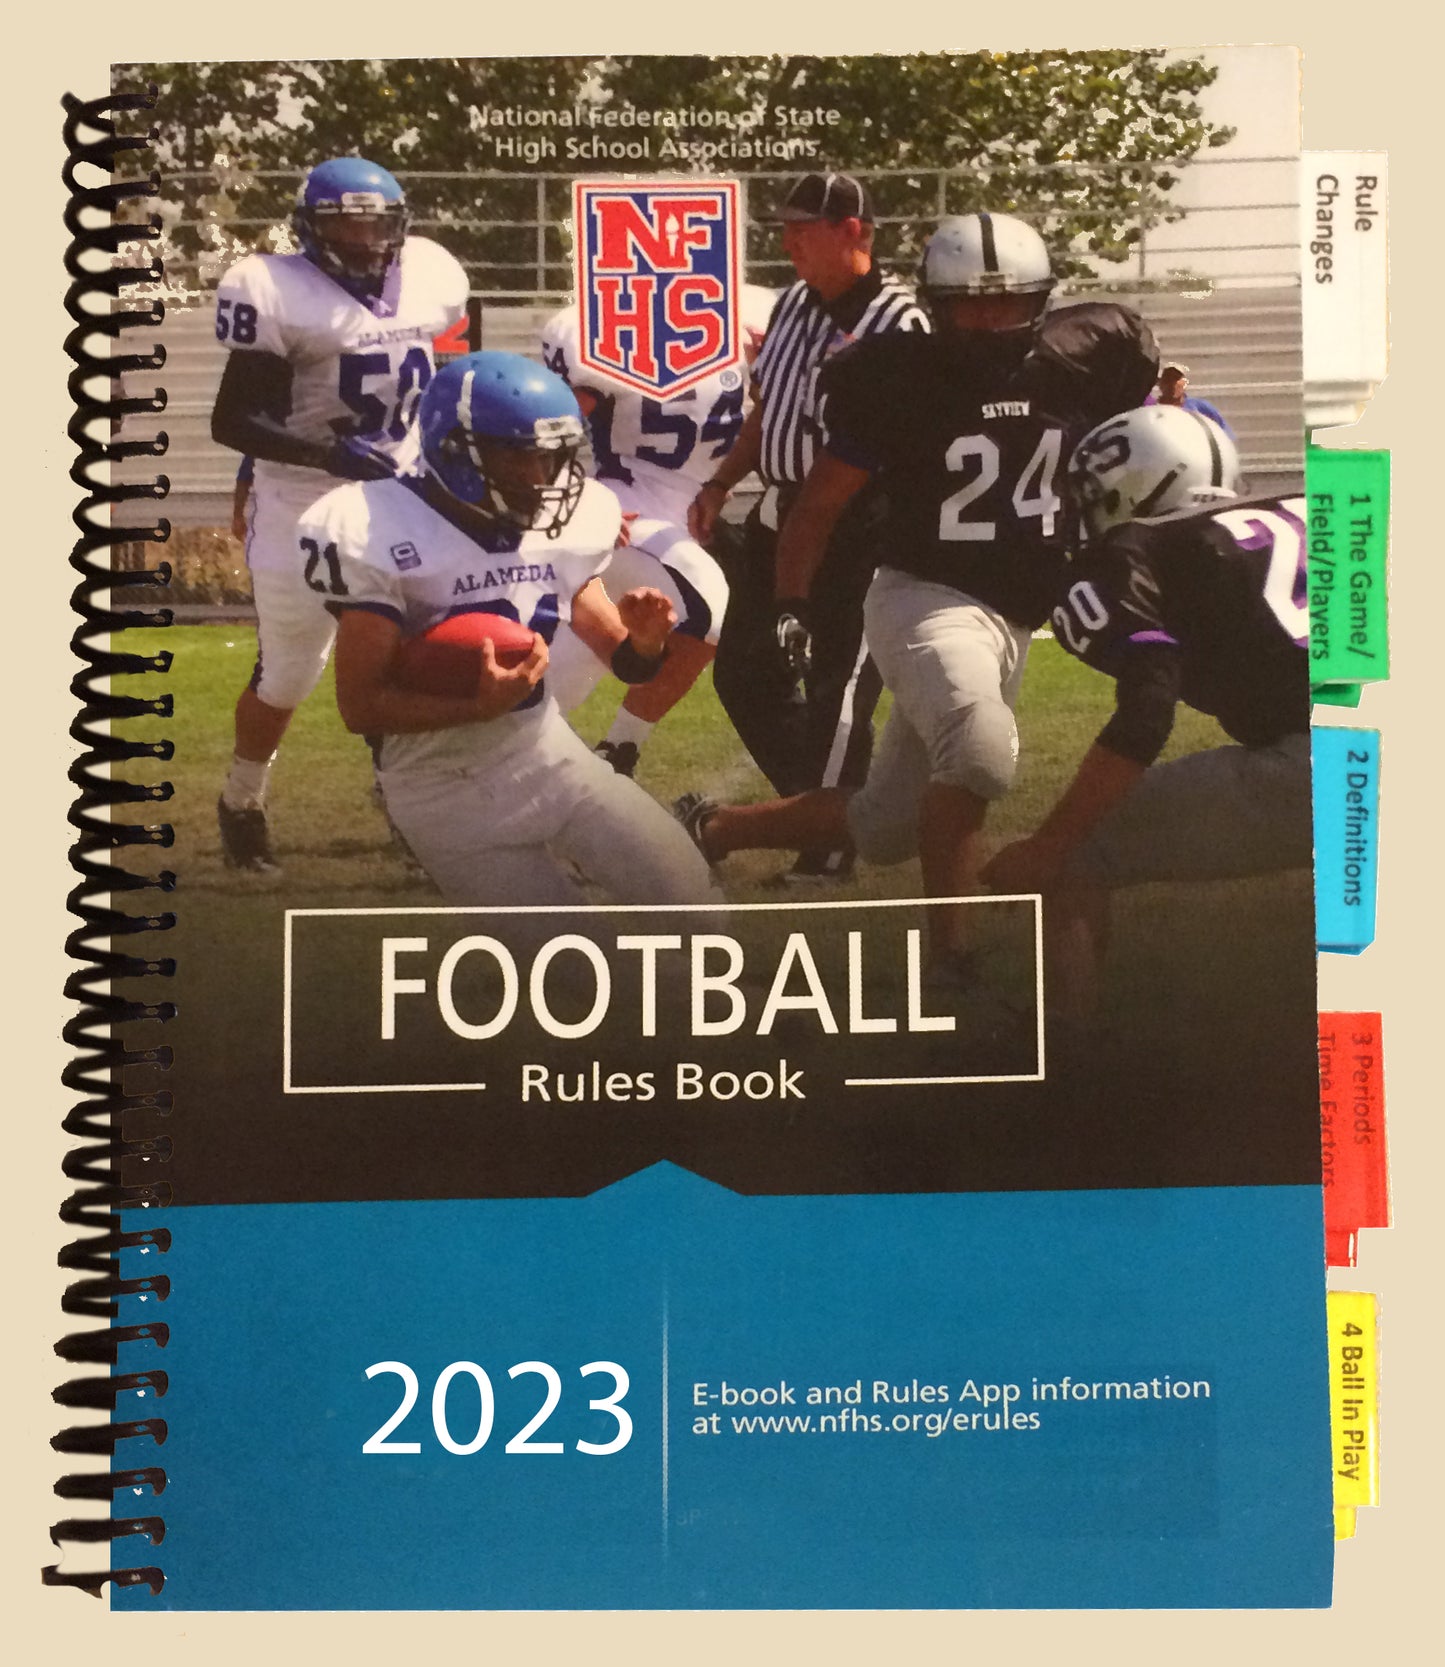 NFHS Football Rules Book Tabs